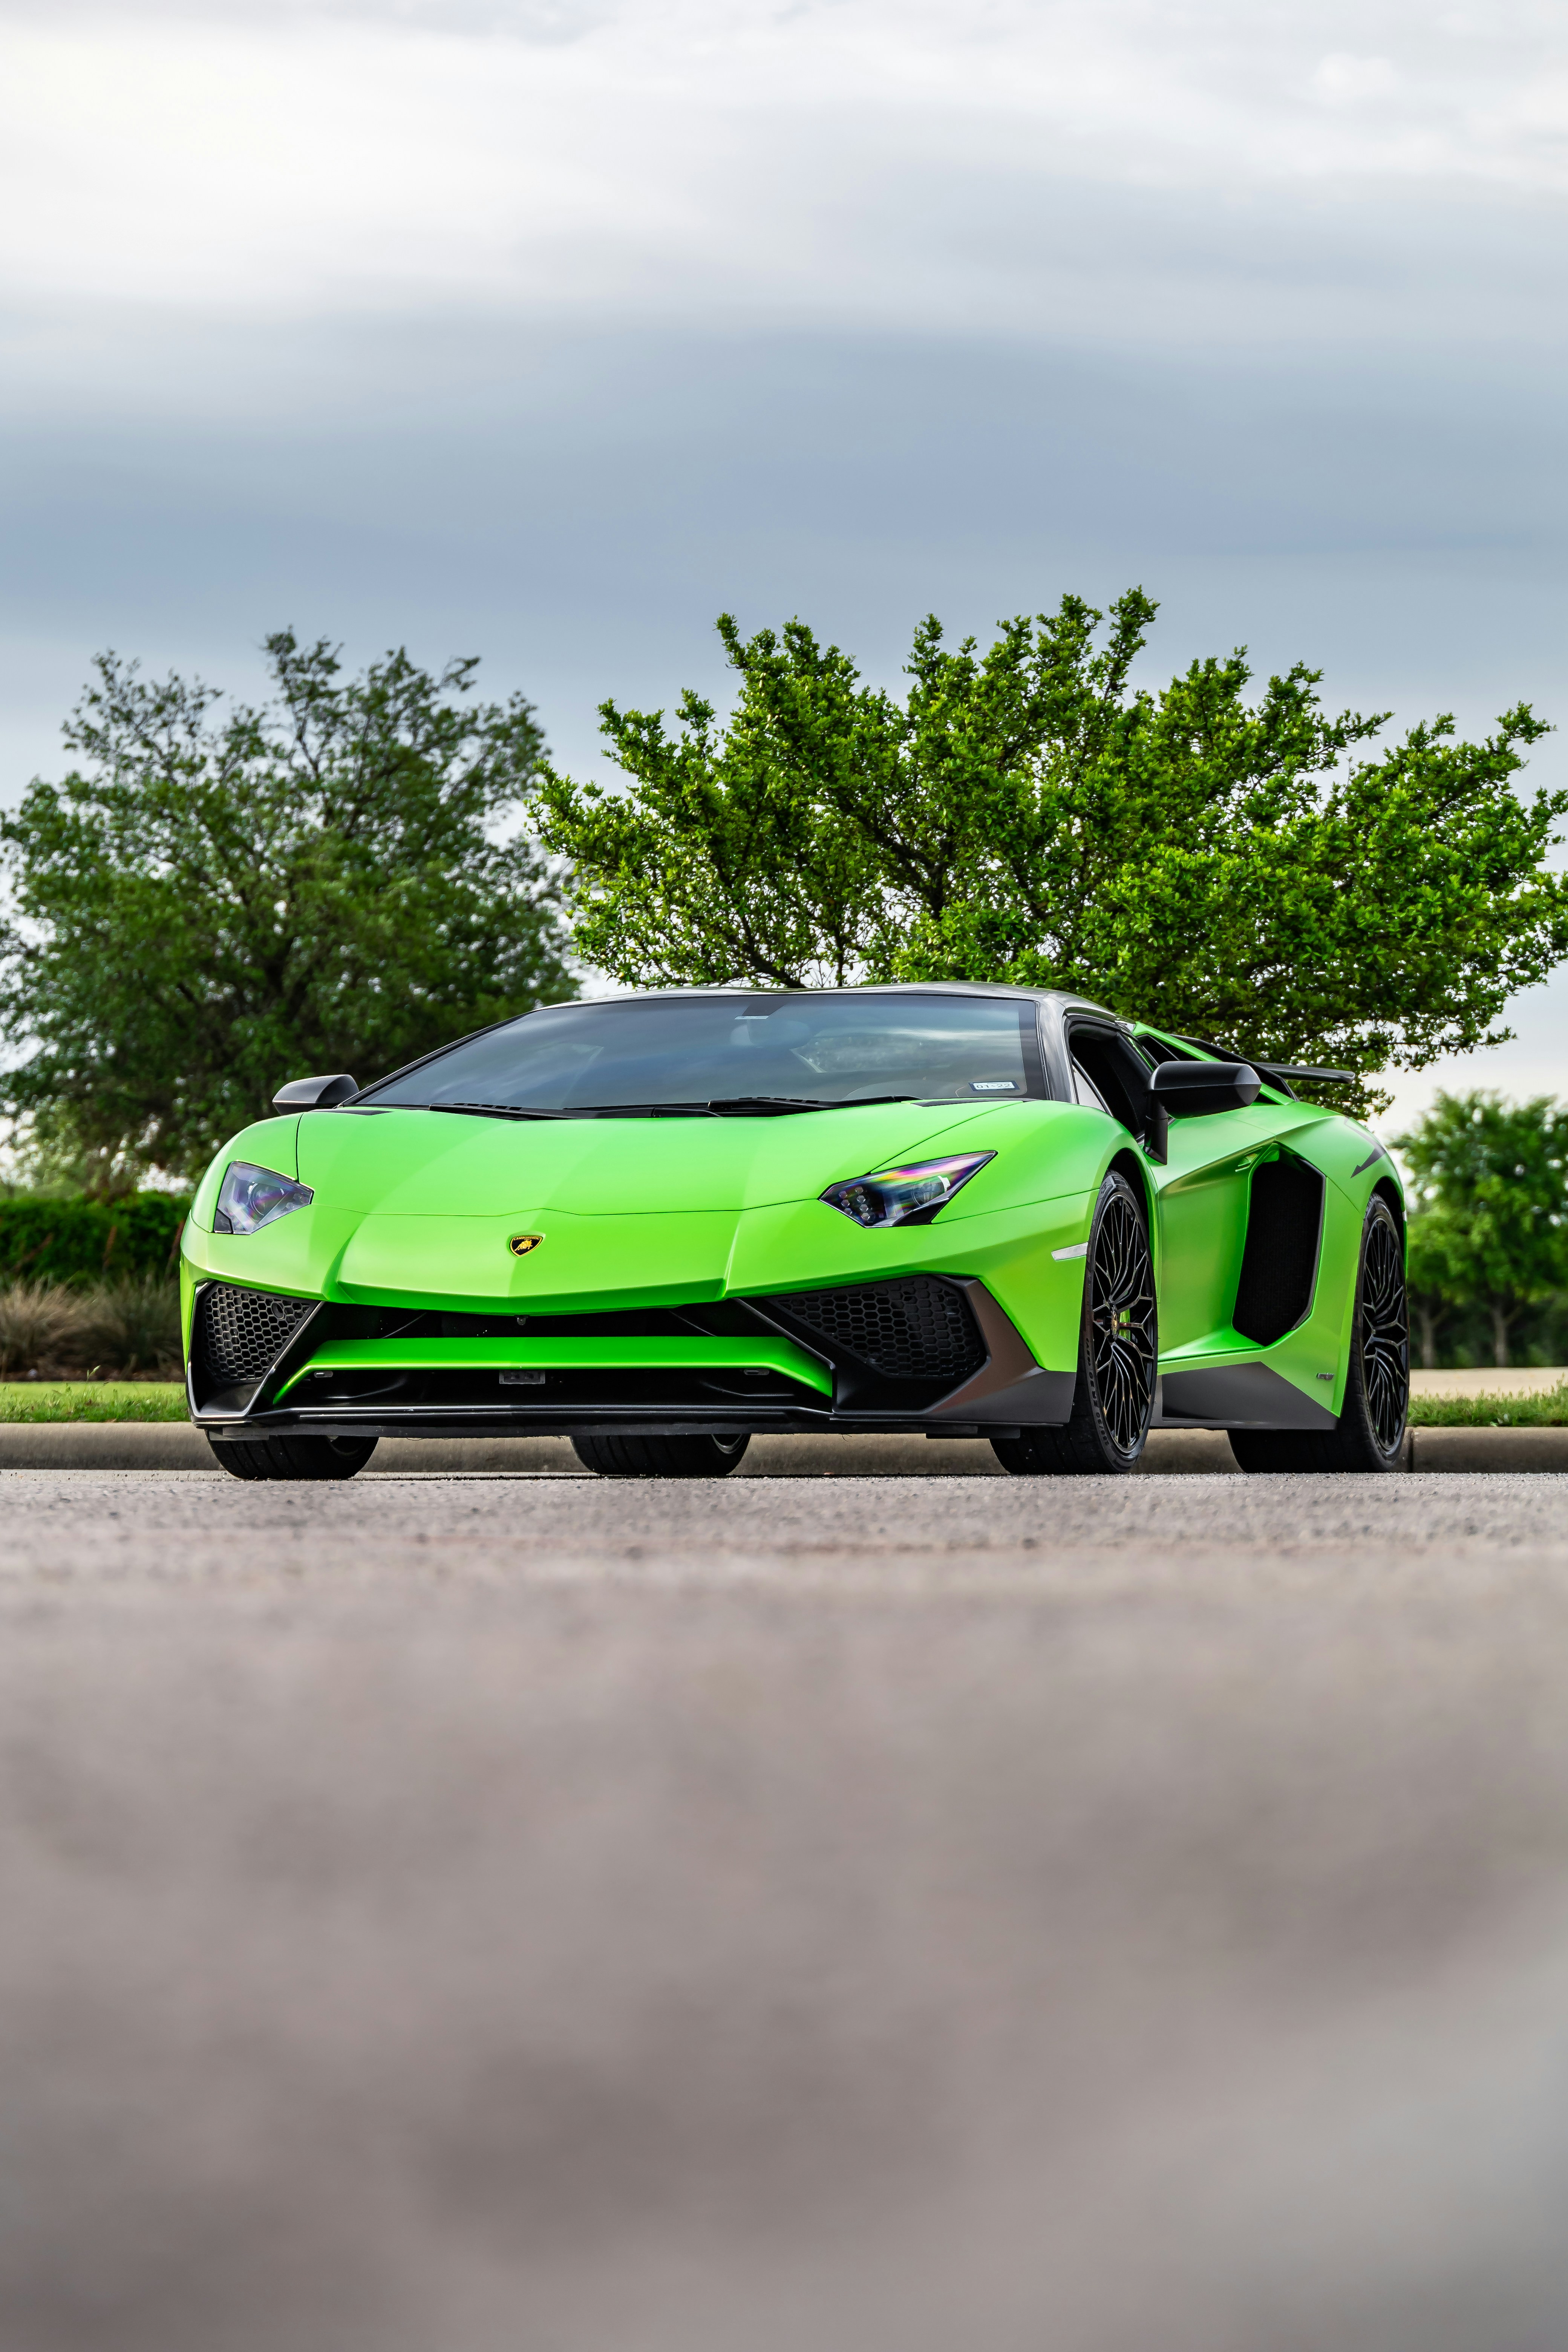 Green Lamborghini Aventador SV attending Supercars on Sunday in Austin, Texas.